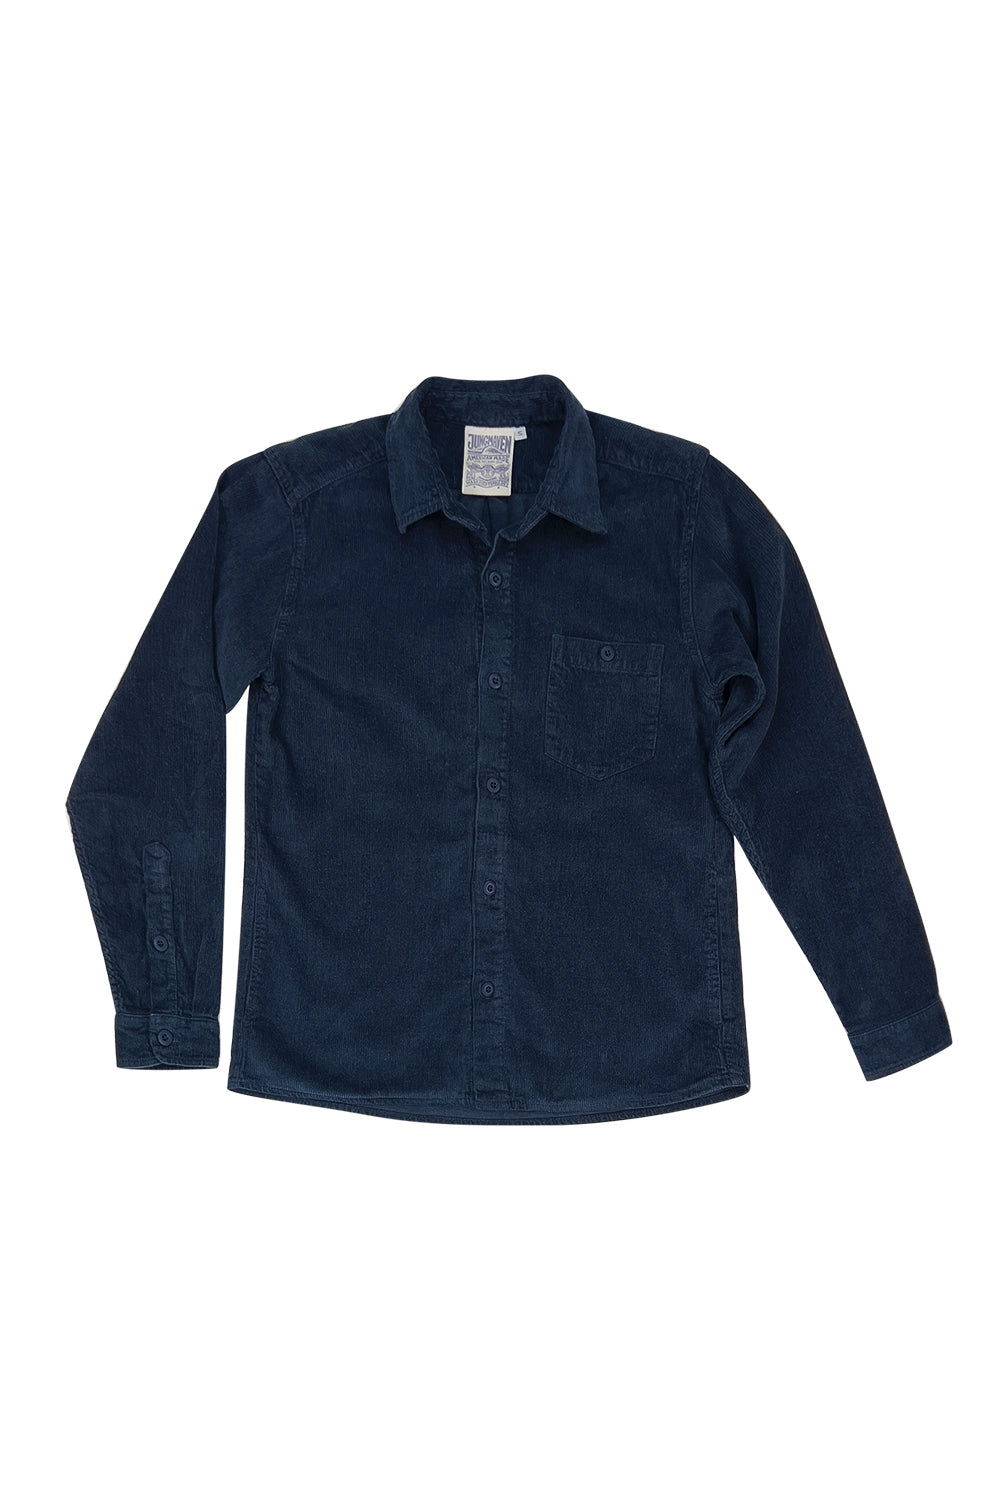 Oxnard Shirt Jacket | Jungmaven Hemp Clothing & Accessories Color: Navy